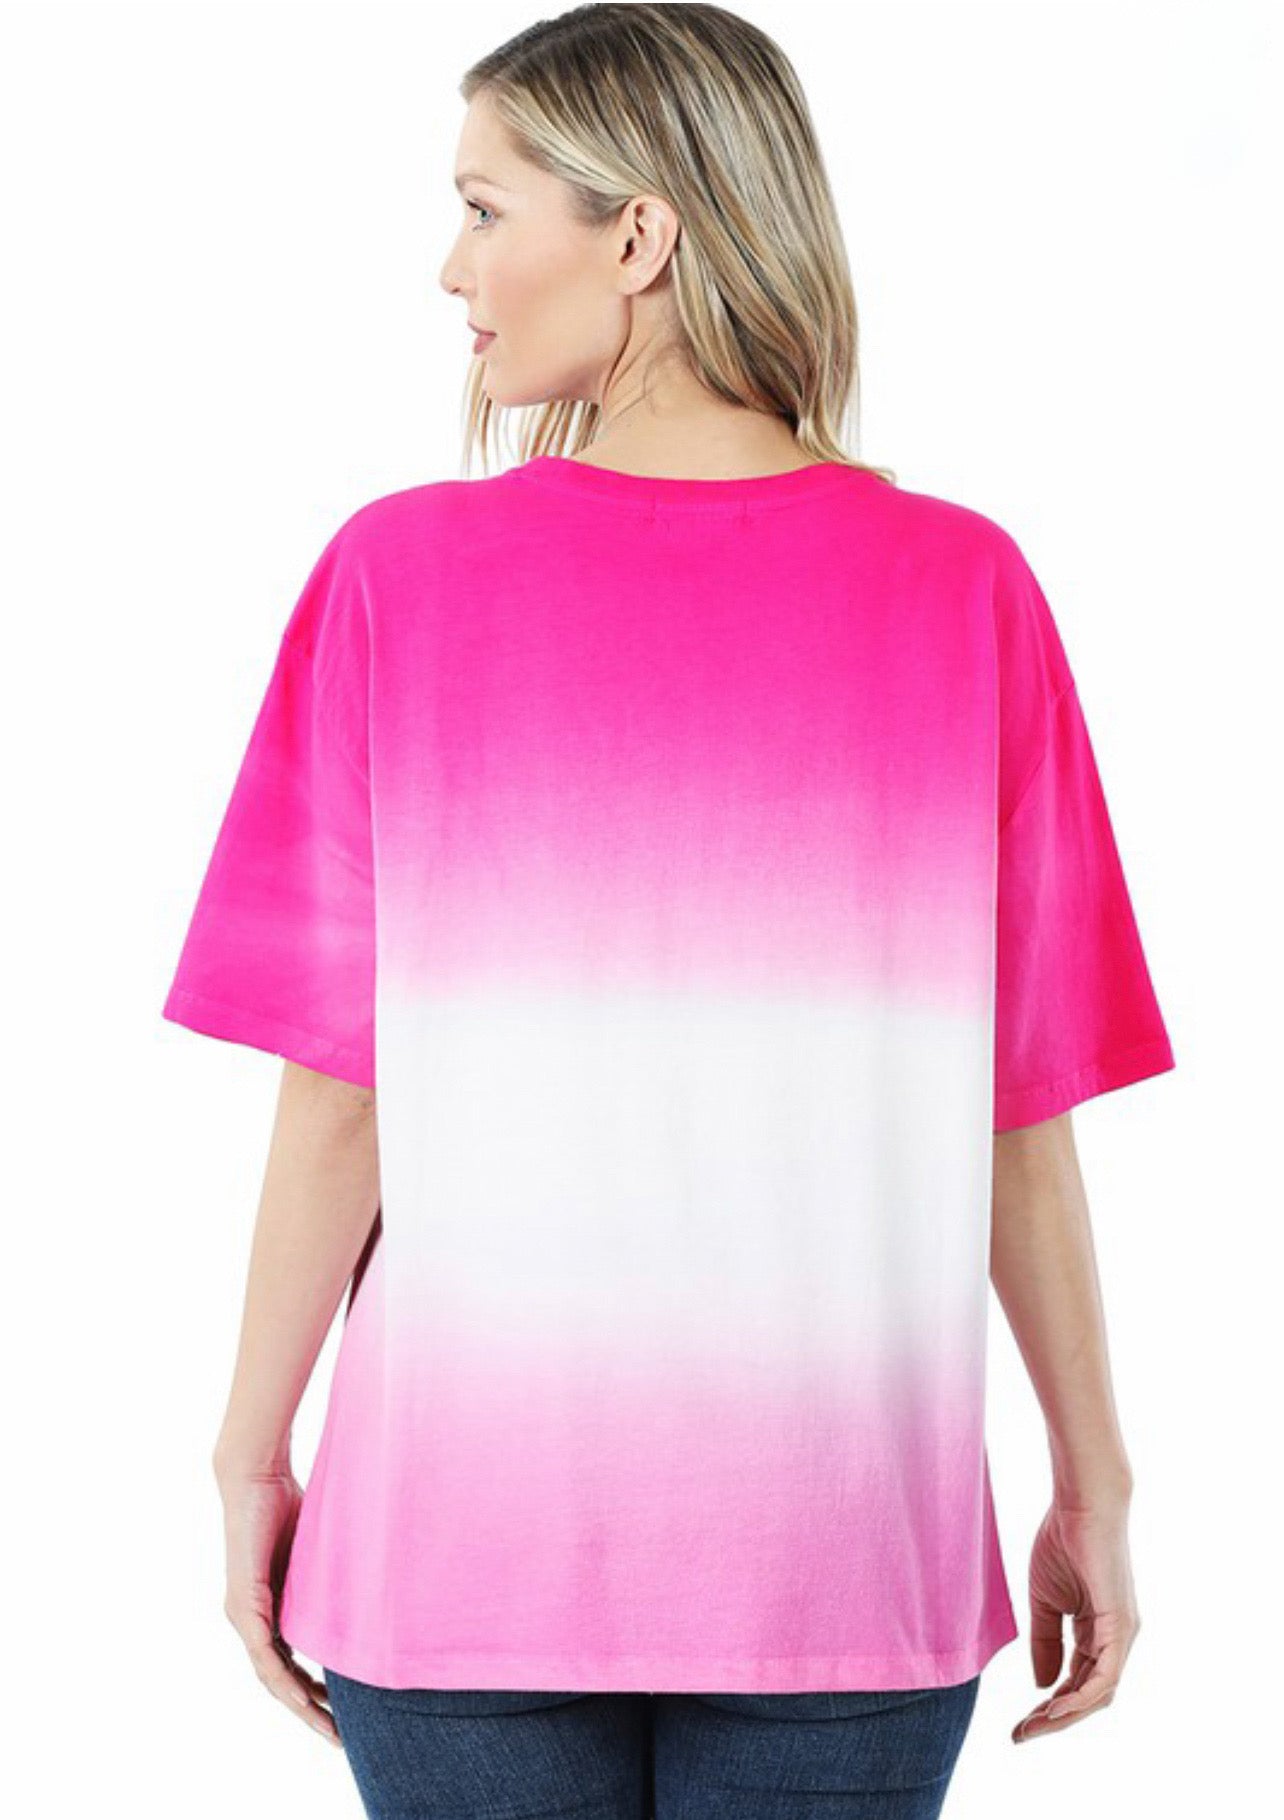 Hot Pink Dip Dye Oversized Top